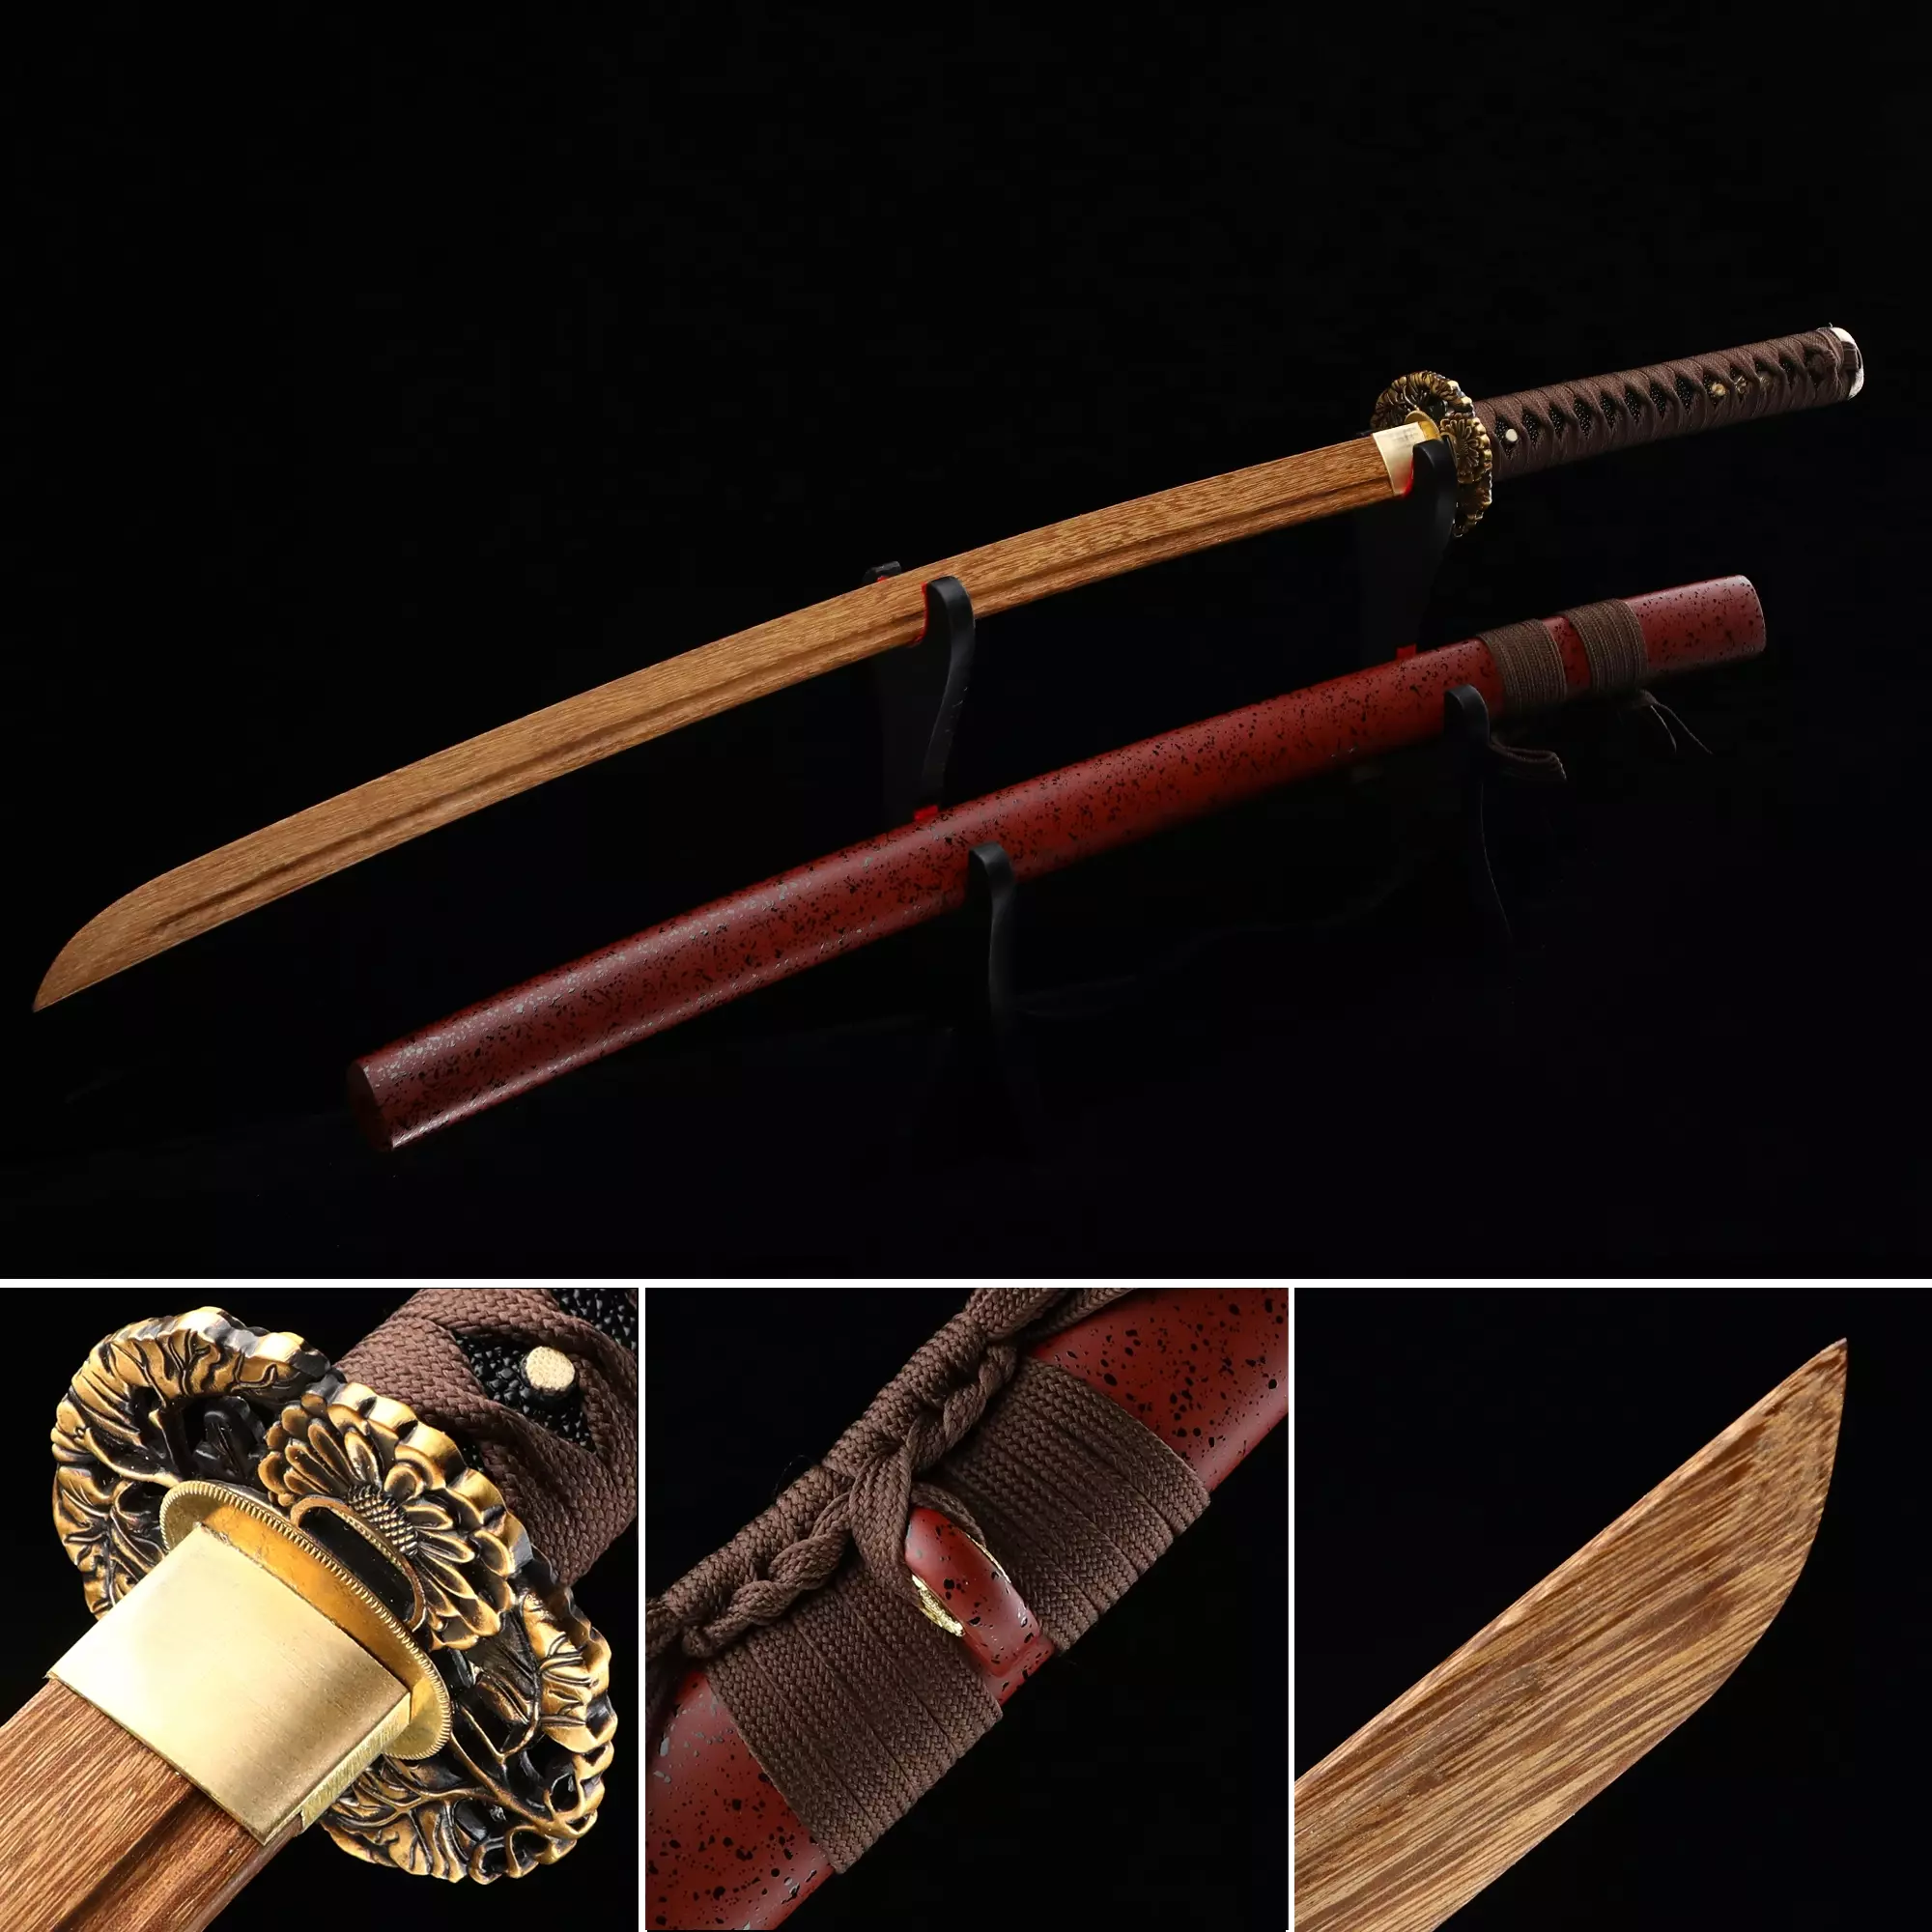 Wooden Katana | Handmade Japanese Wooden Unsharp Katana Sword With ...